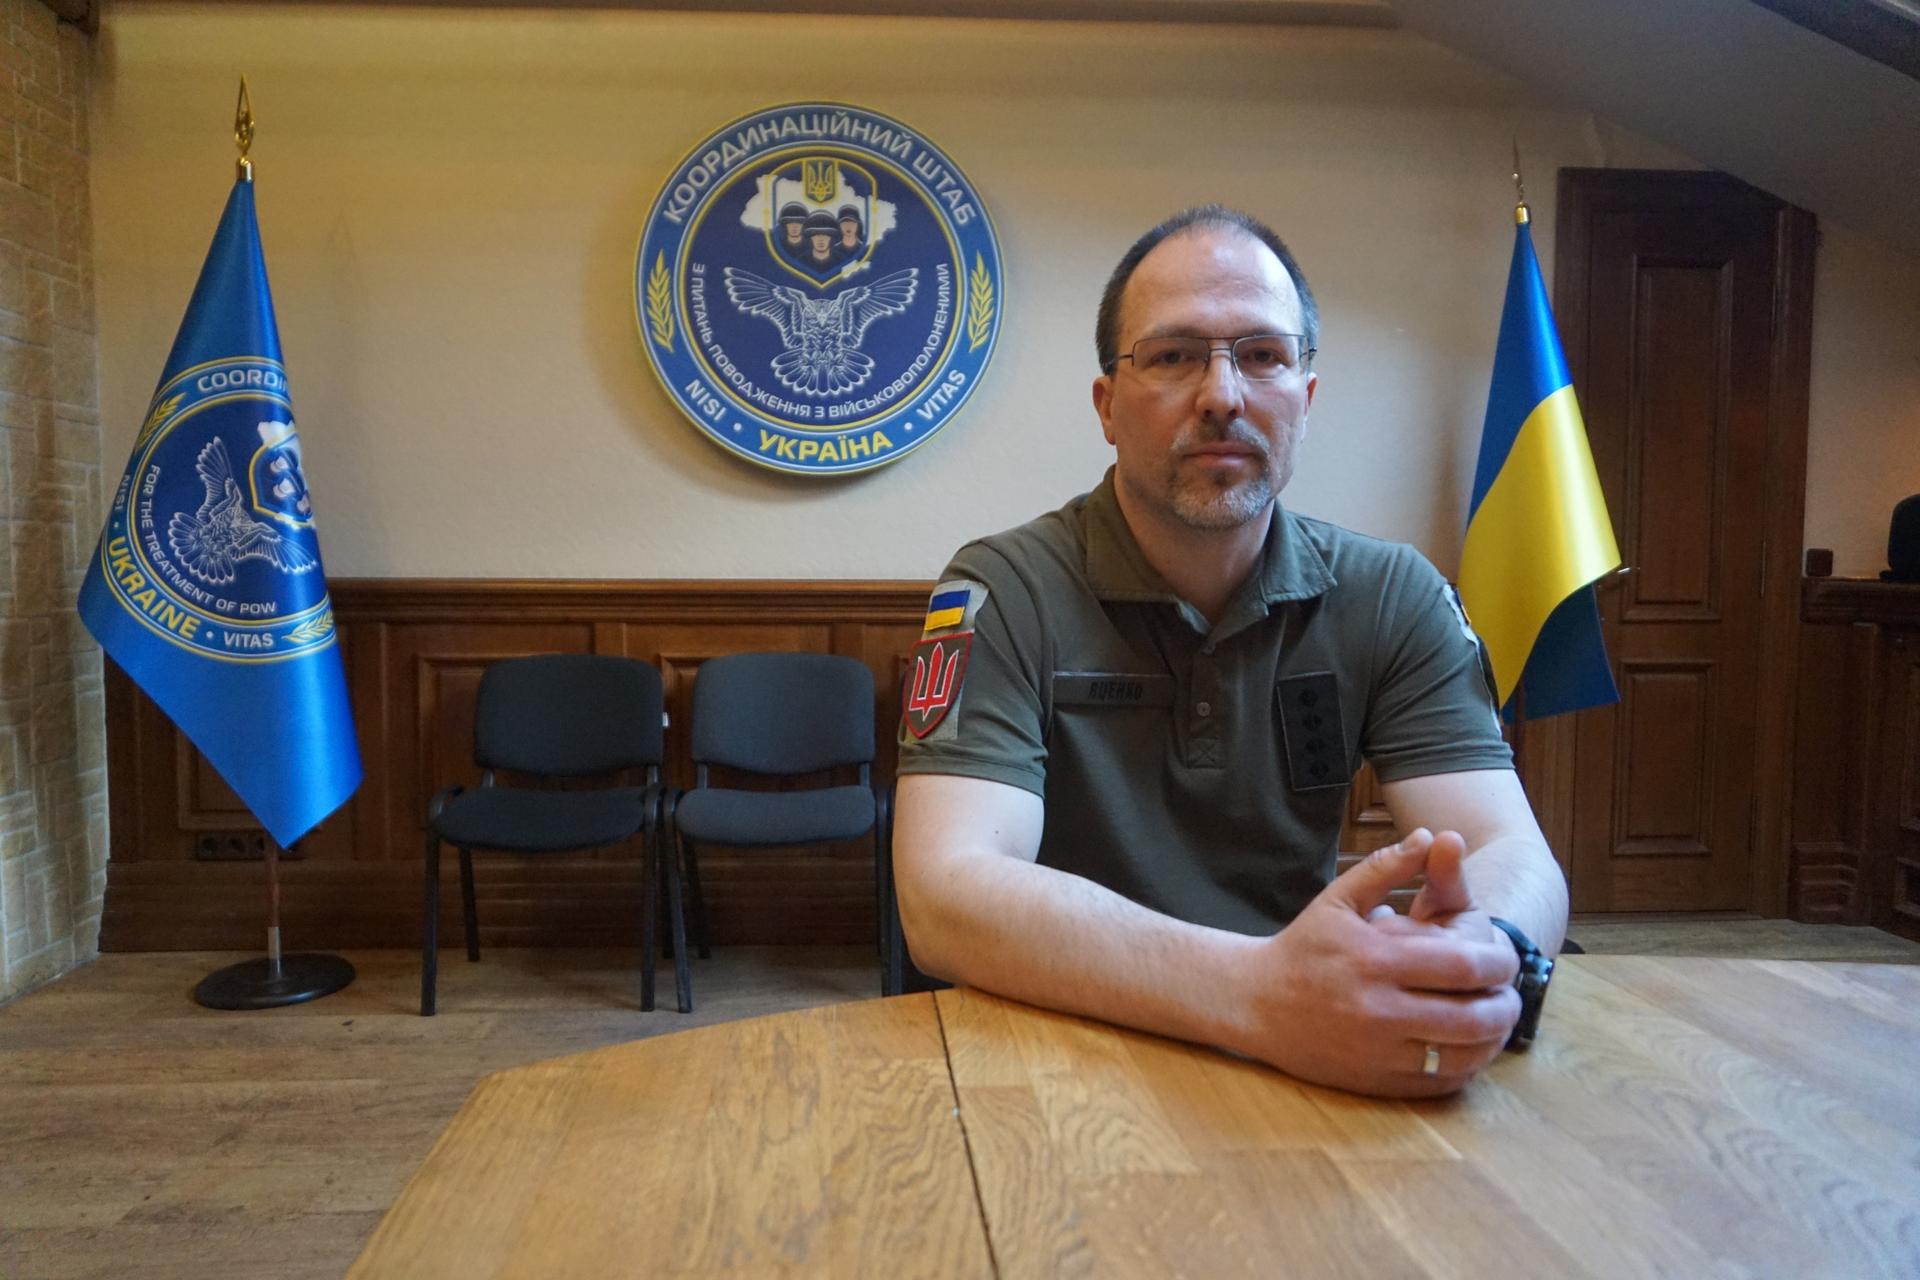 Petro Yatsenko is the spokesman for Ukraine’s Coordination Headquarters for Treatment of POWs.